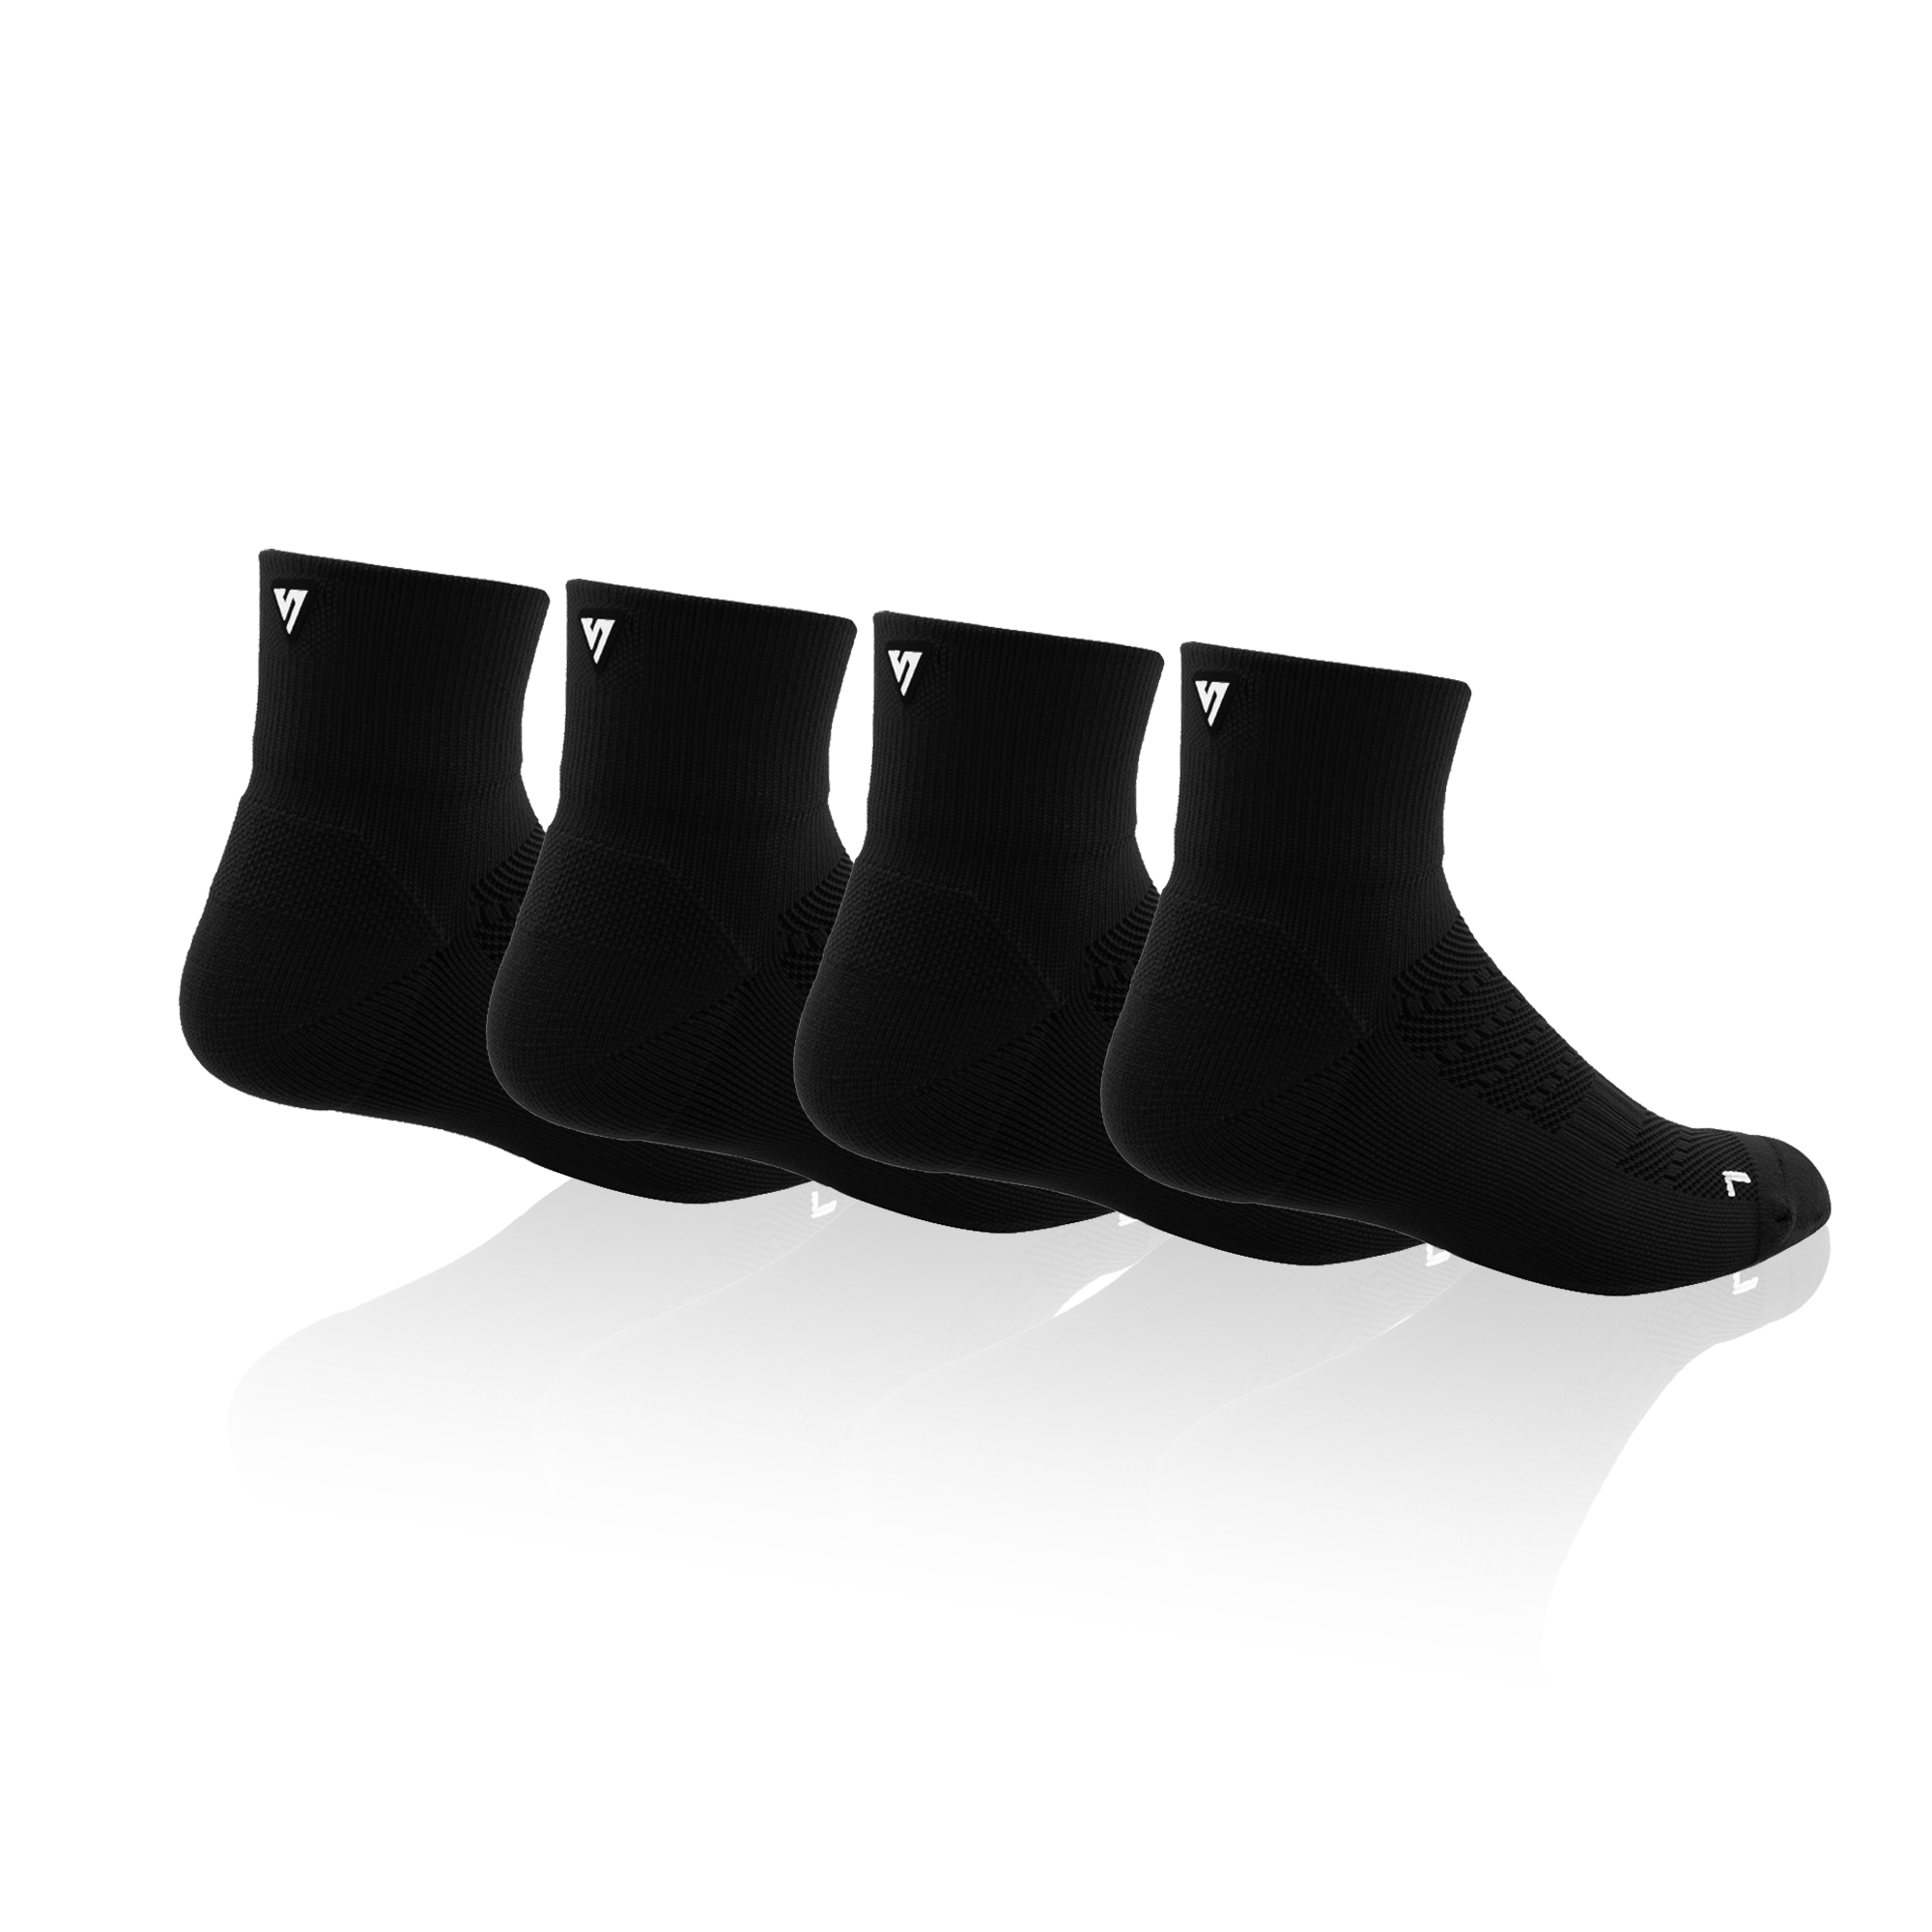 Black Running Quarter Socks Bundle (4 Pack)